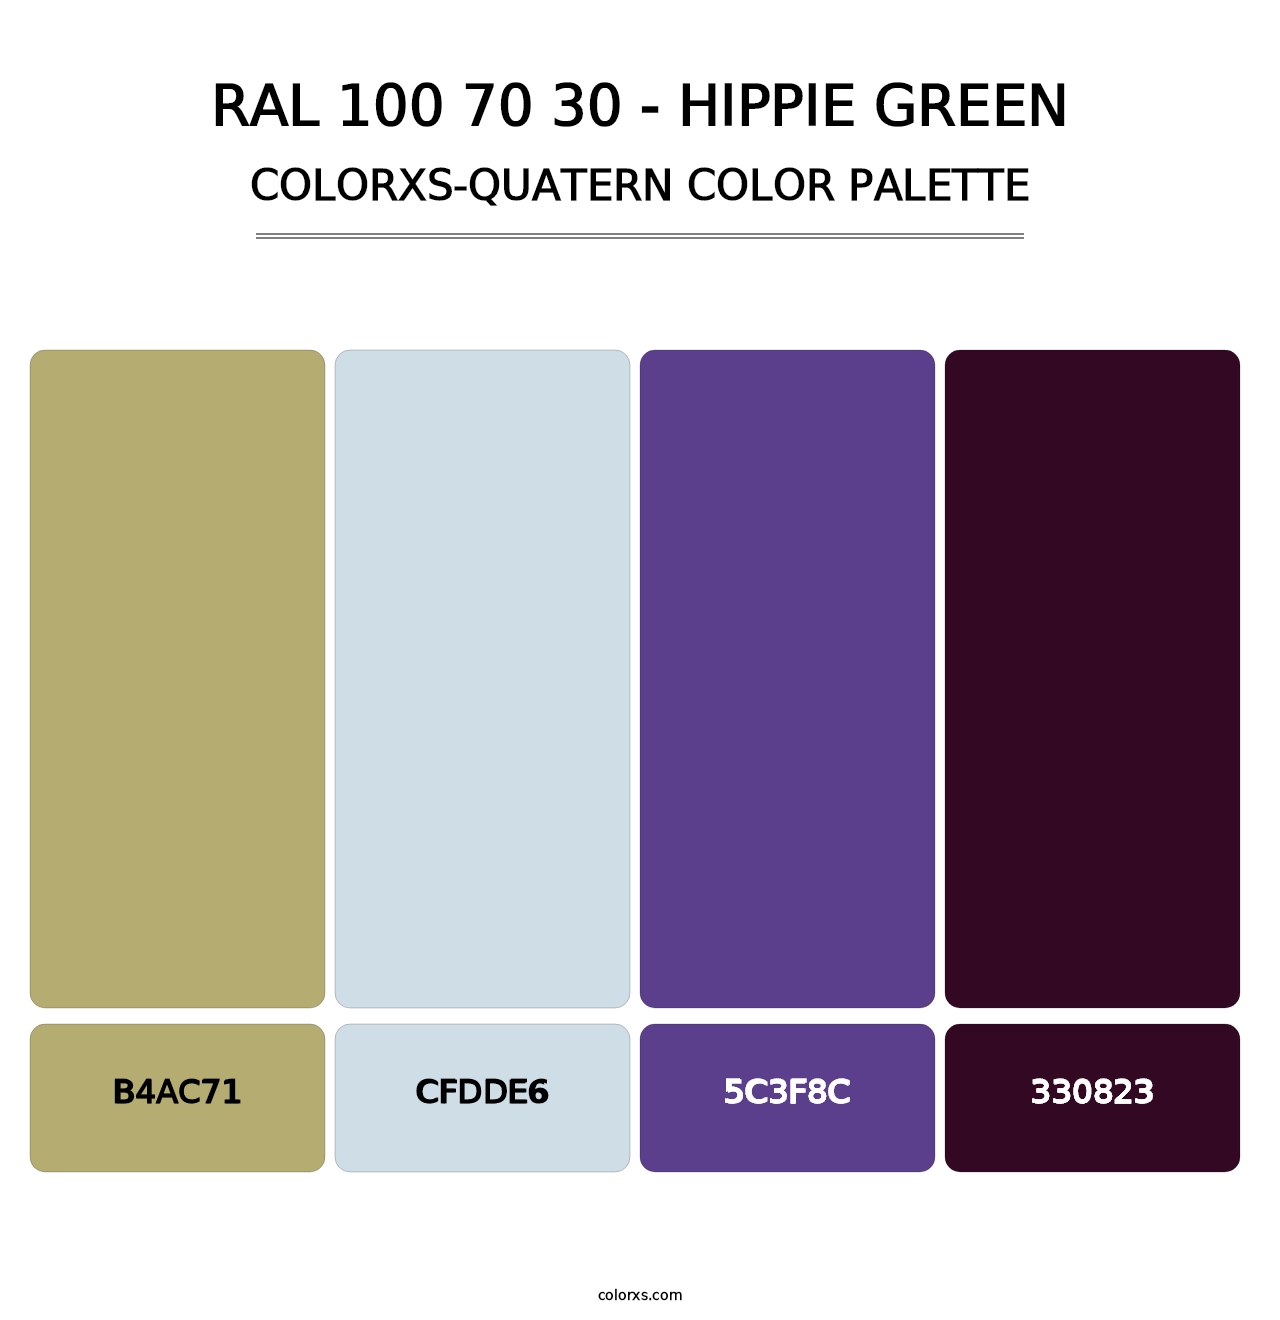 RAL 100 70 30 - Hippie Green - Colorxs Quatern Palette